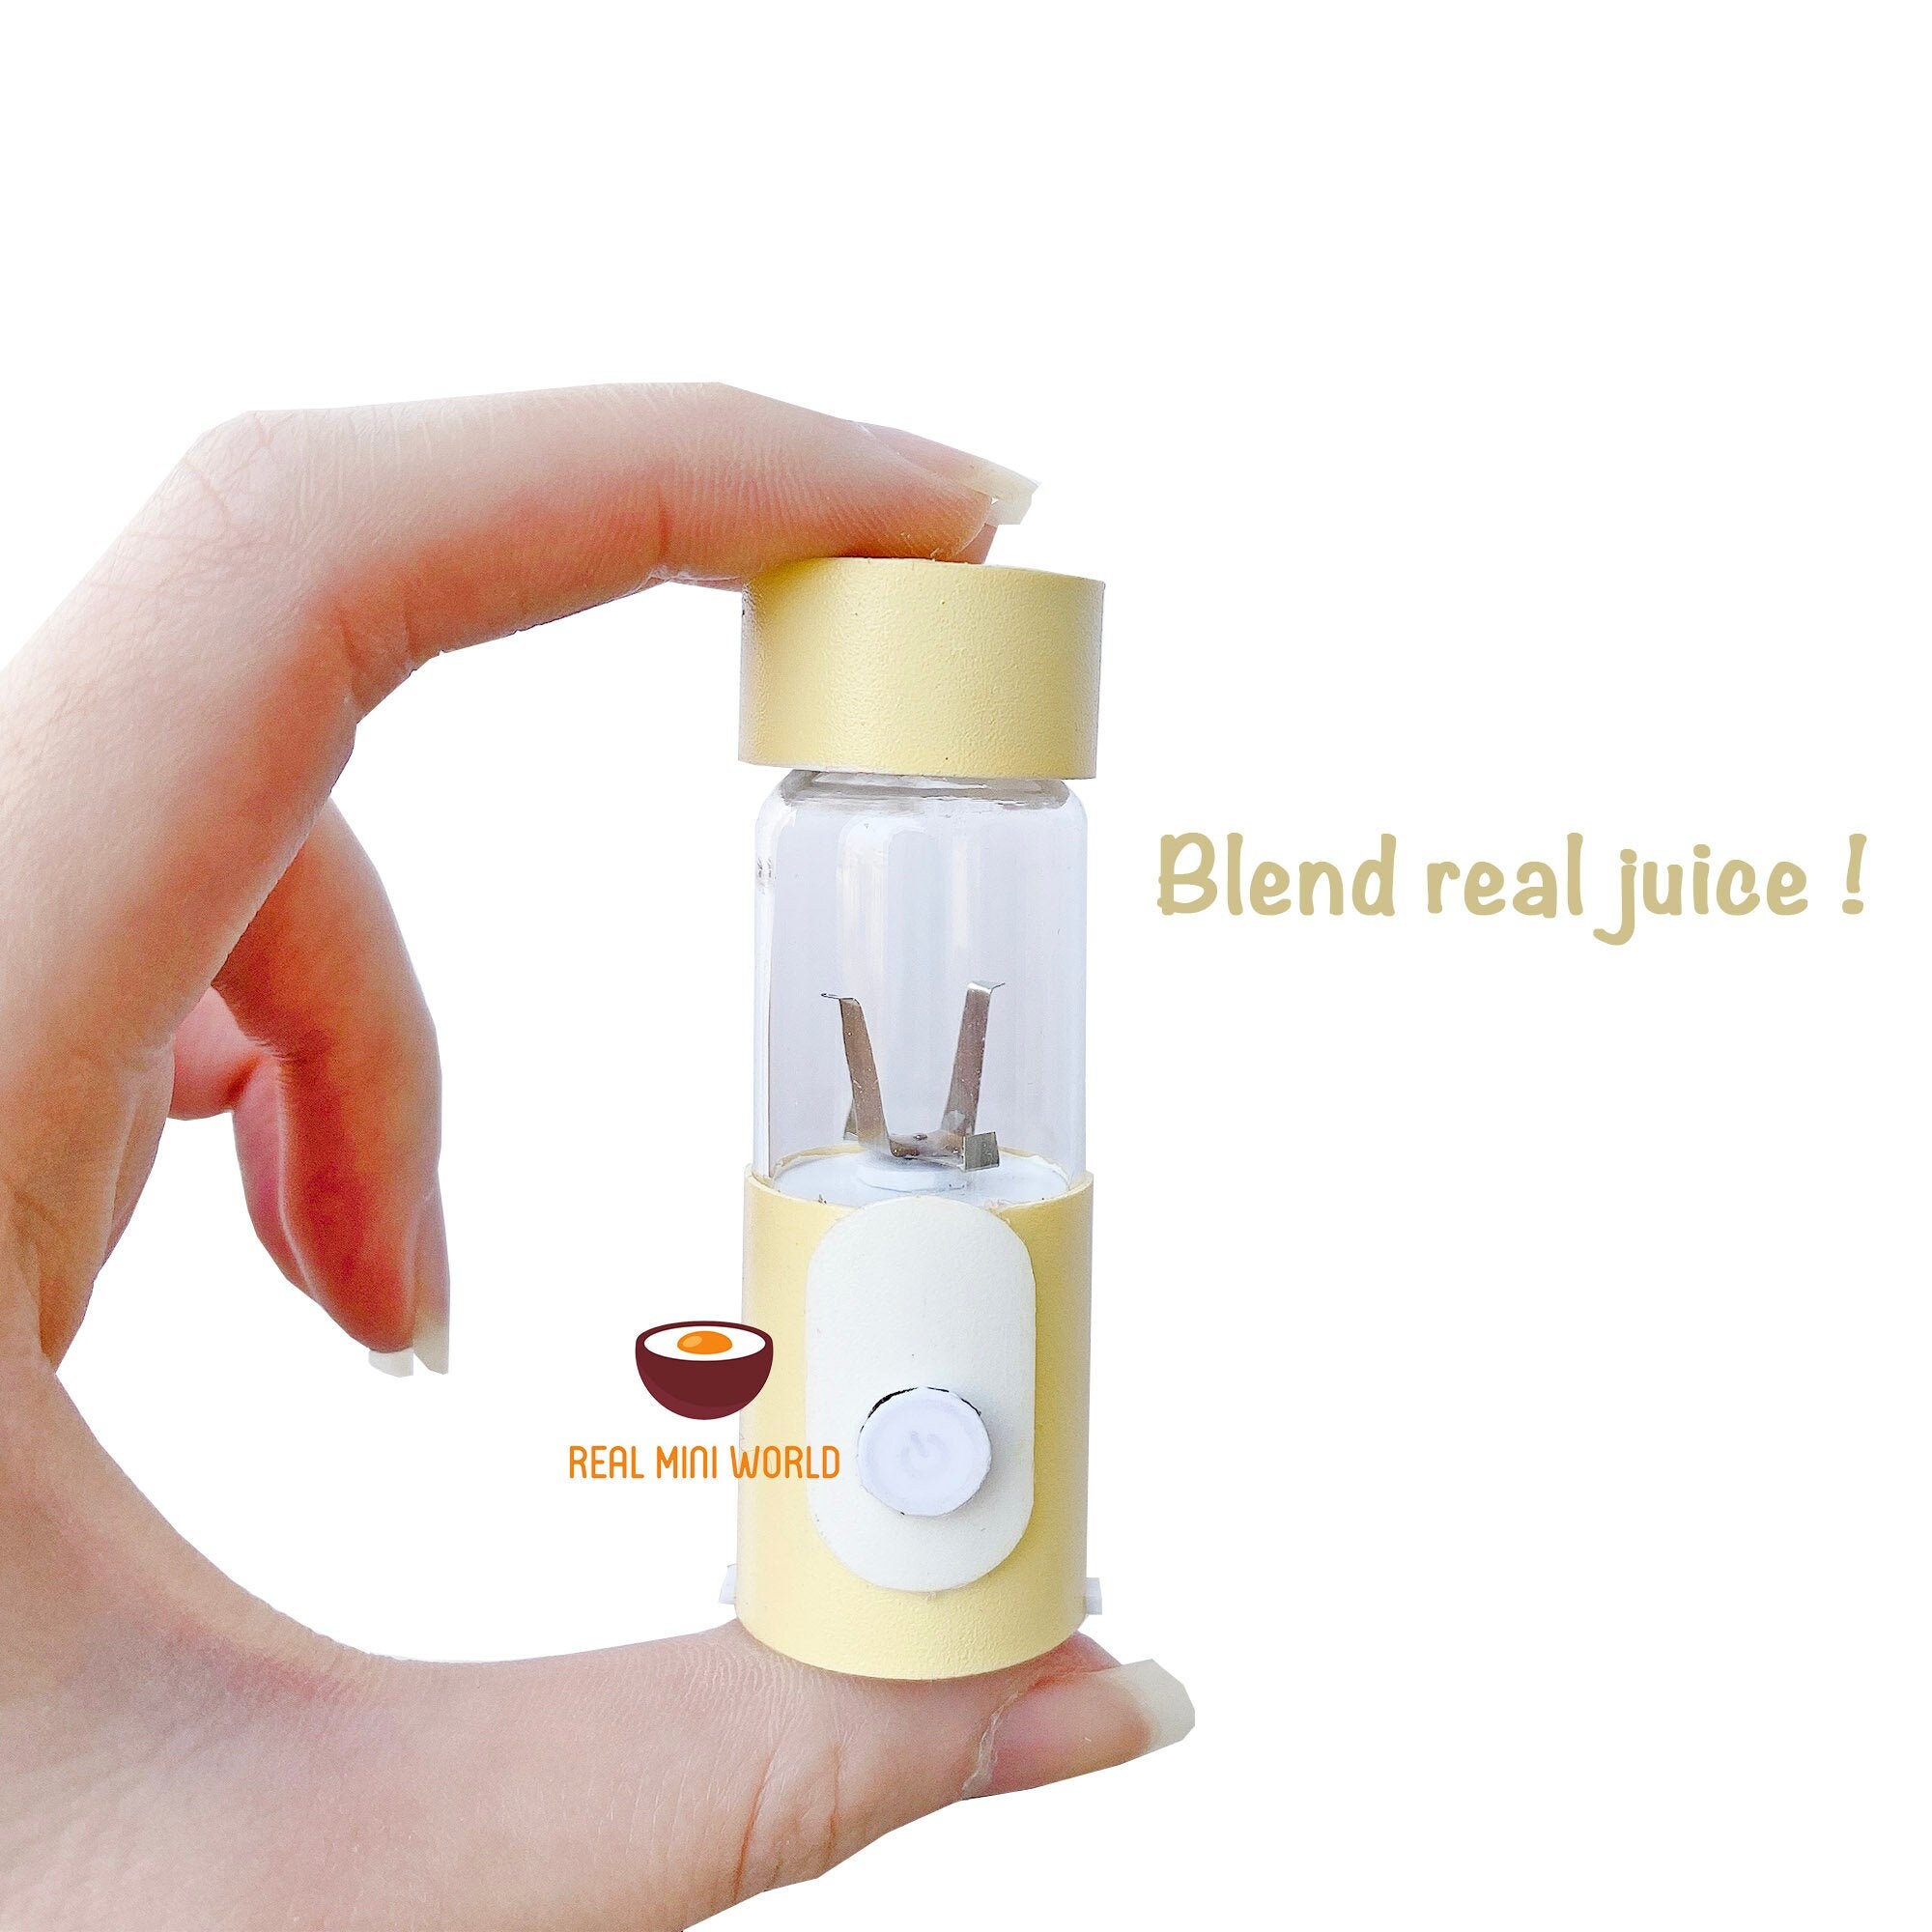 Real Working Miniature Juicer Blender Pastel Yellow | Can Blend Real Fruit & Vegetables